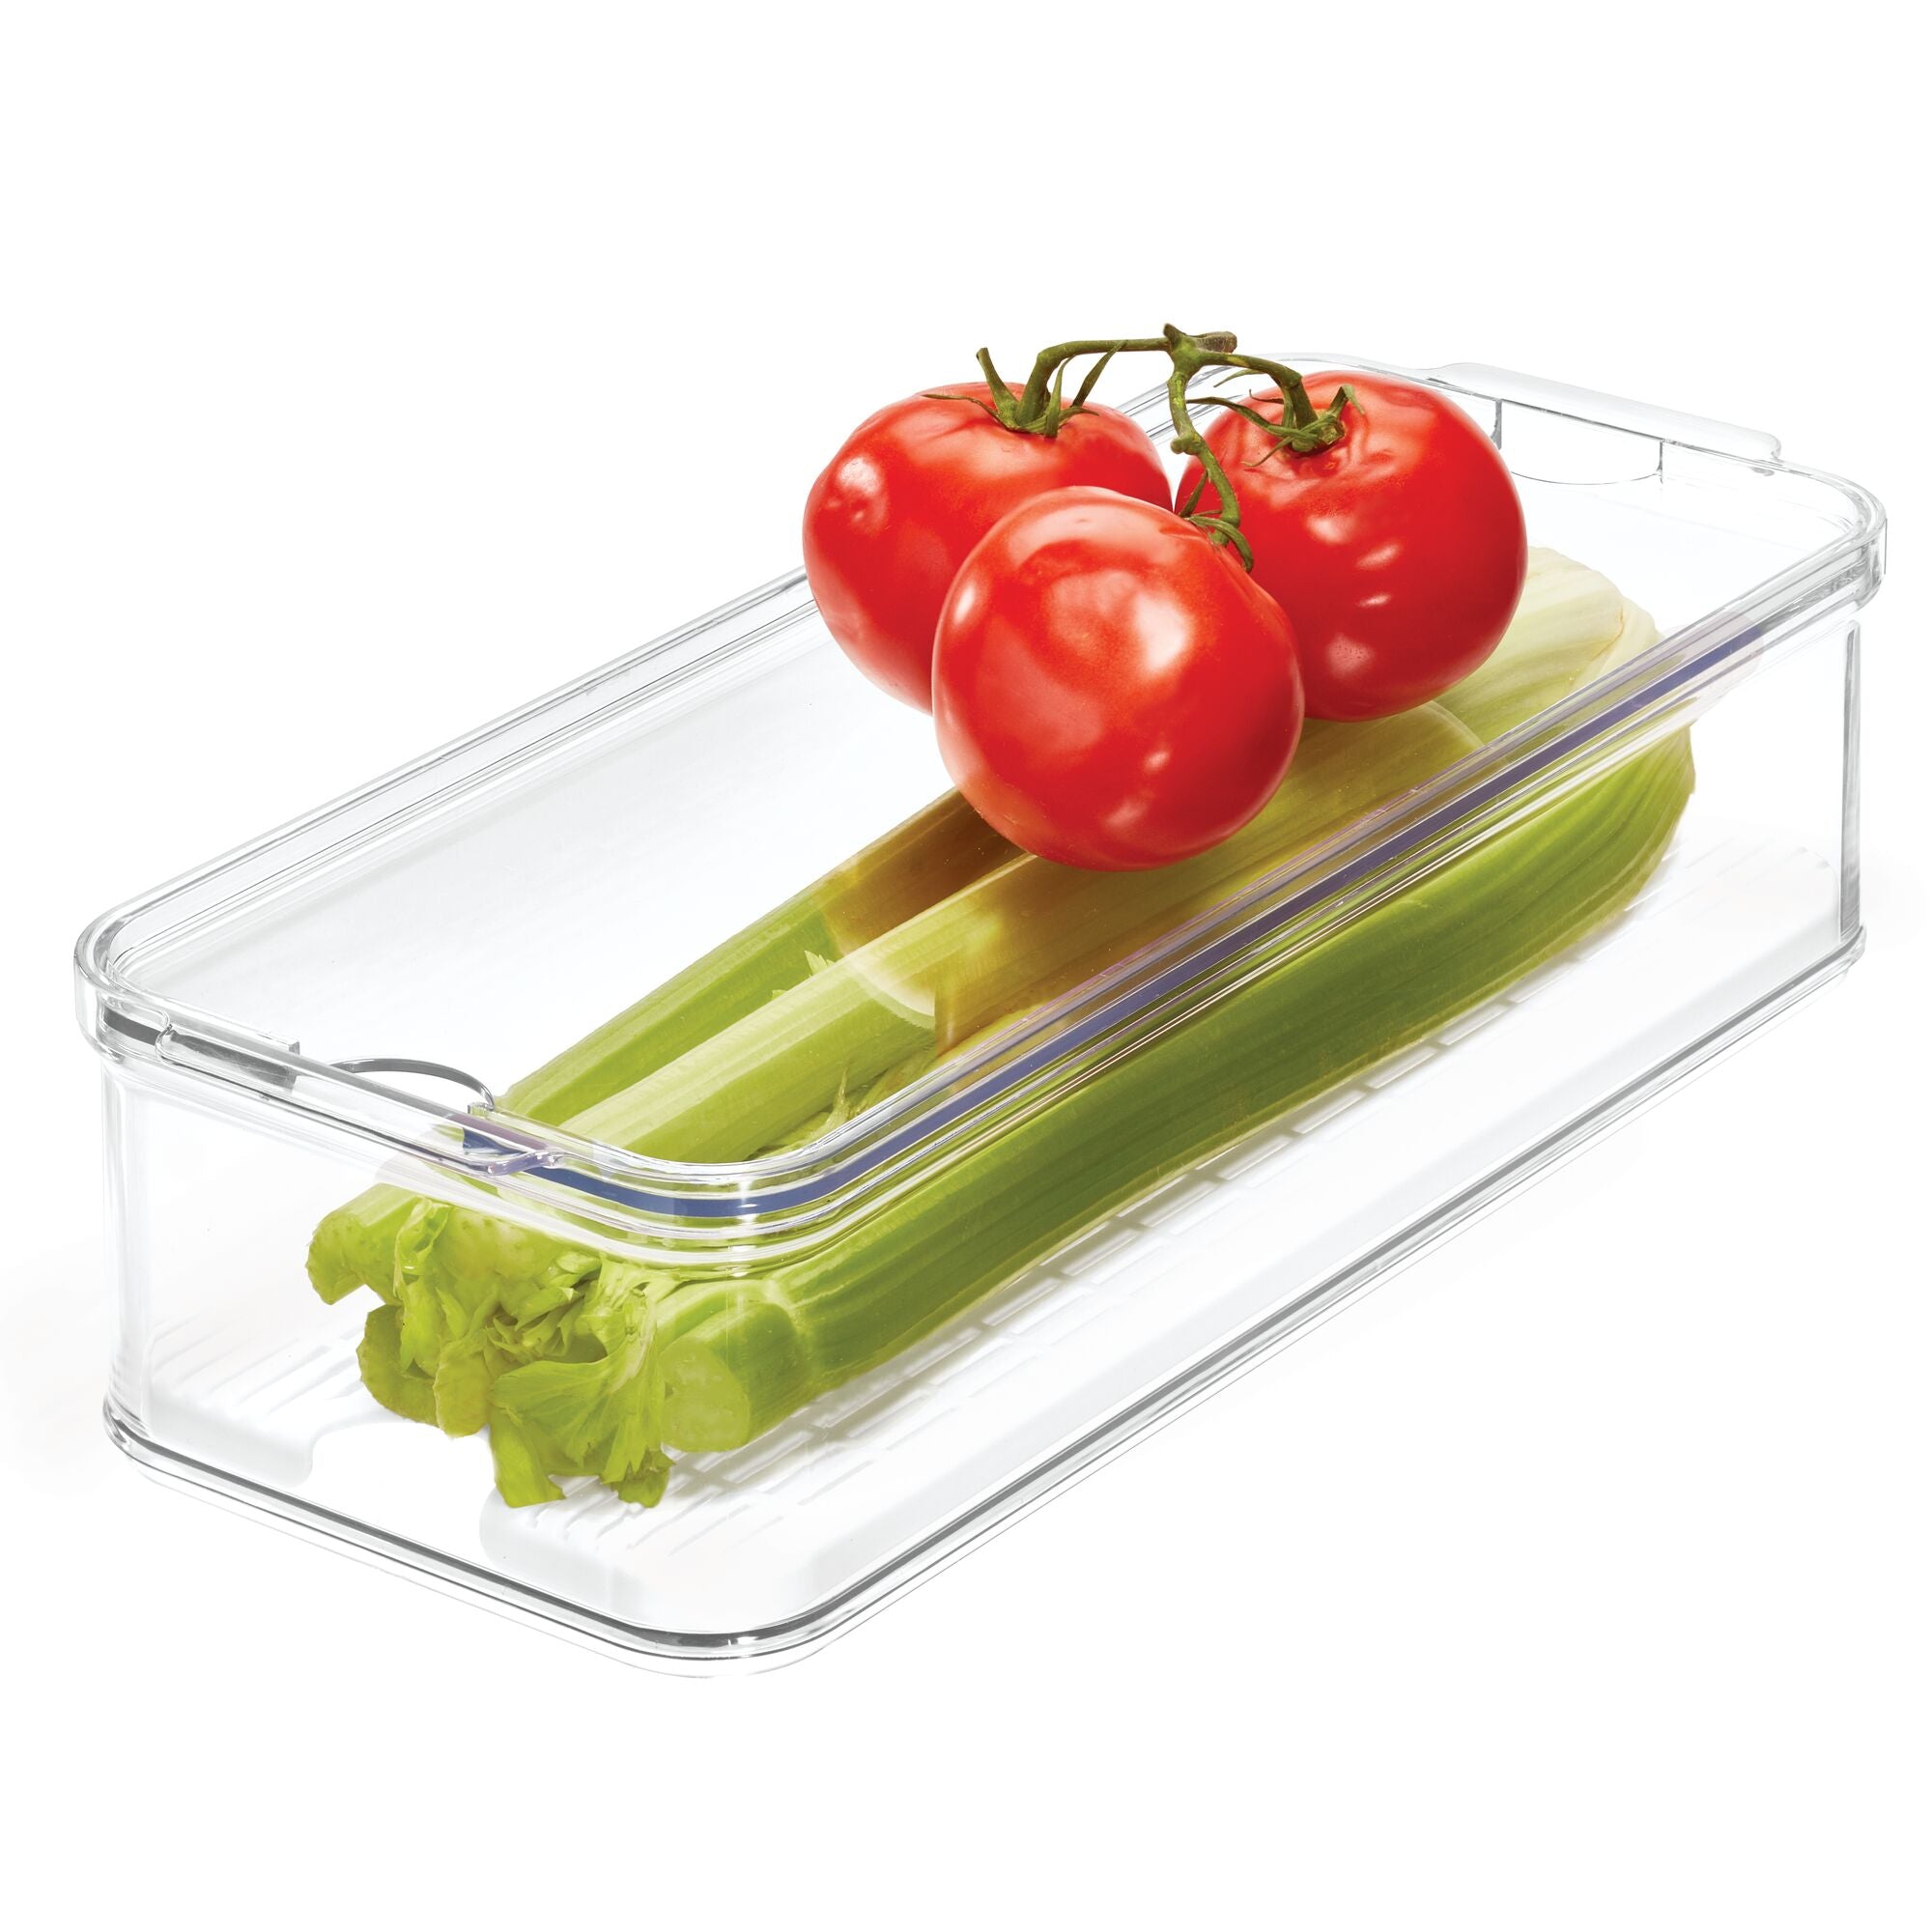 iDesign Crisp BPA-Free Plastic Produce Storage Bin - 8.32 inch x 6.32 inch x 3.76 inch, Clear/Gray, Red